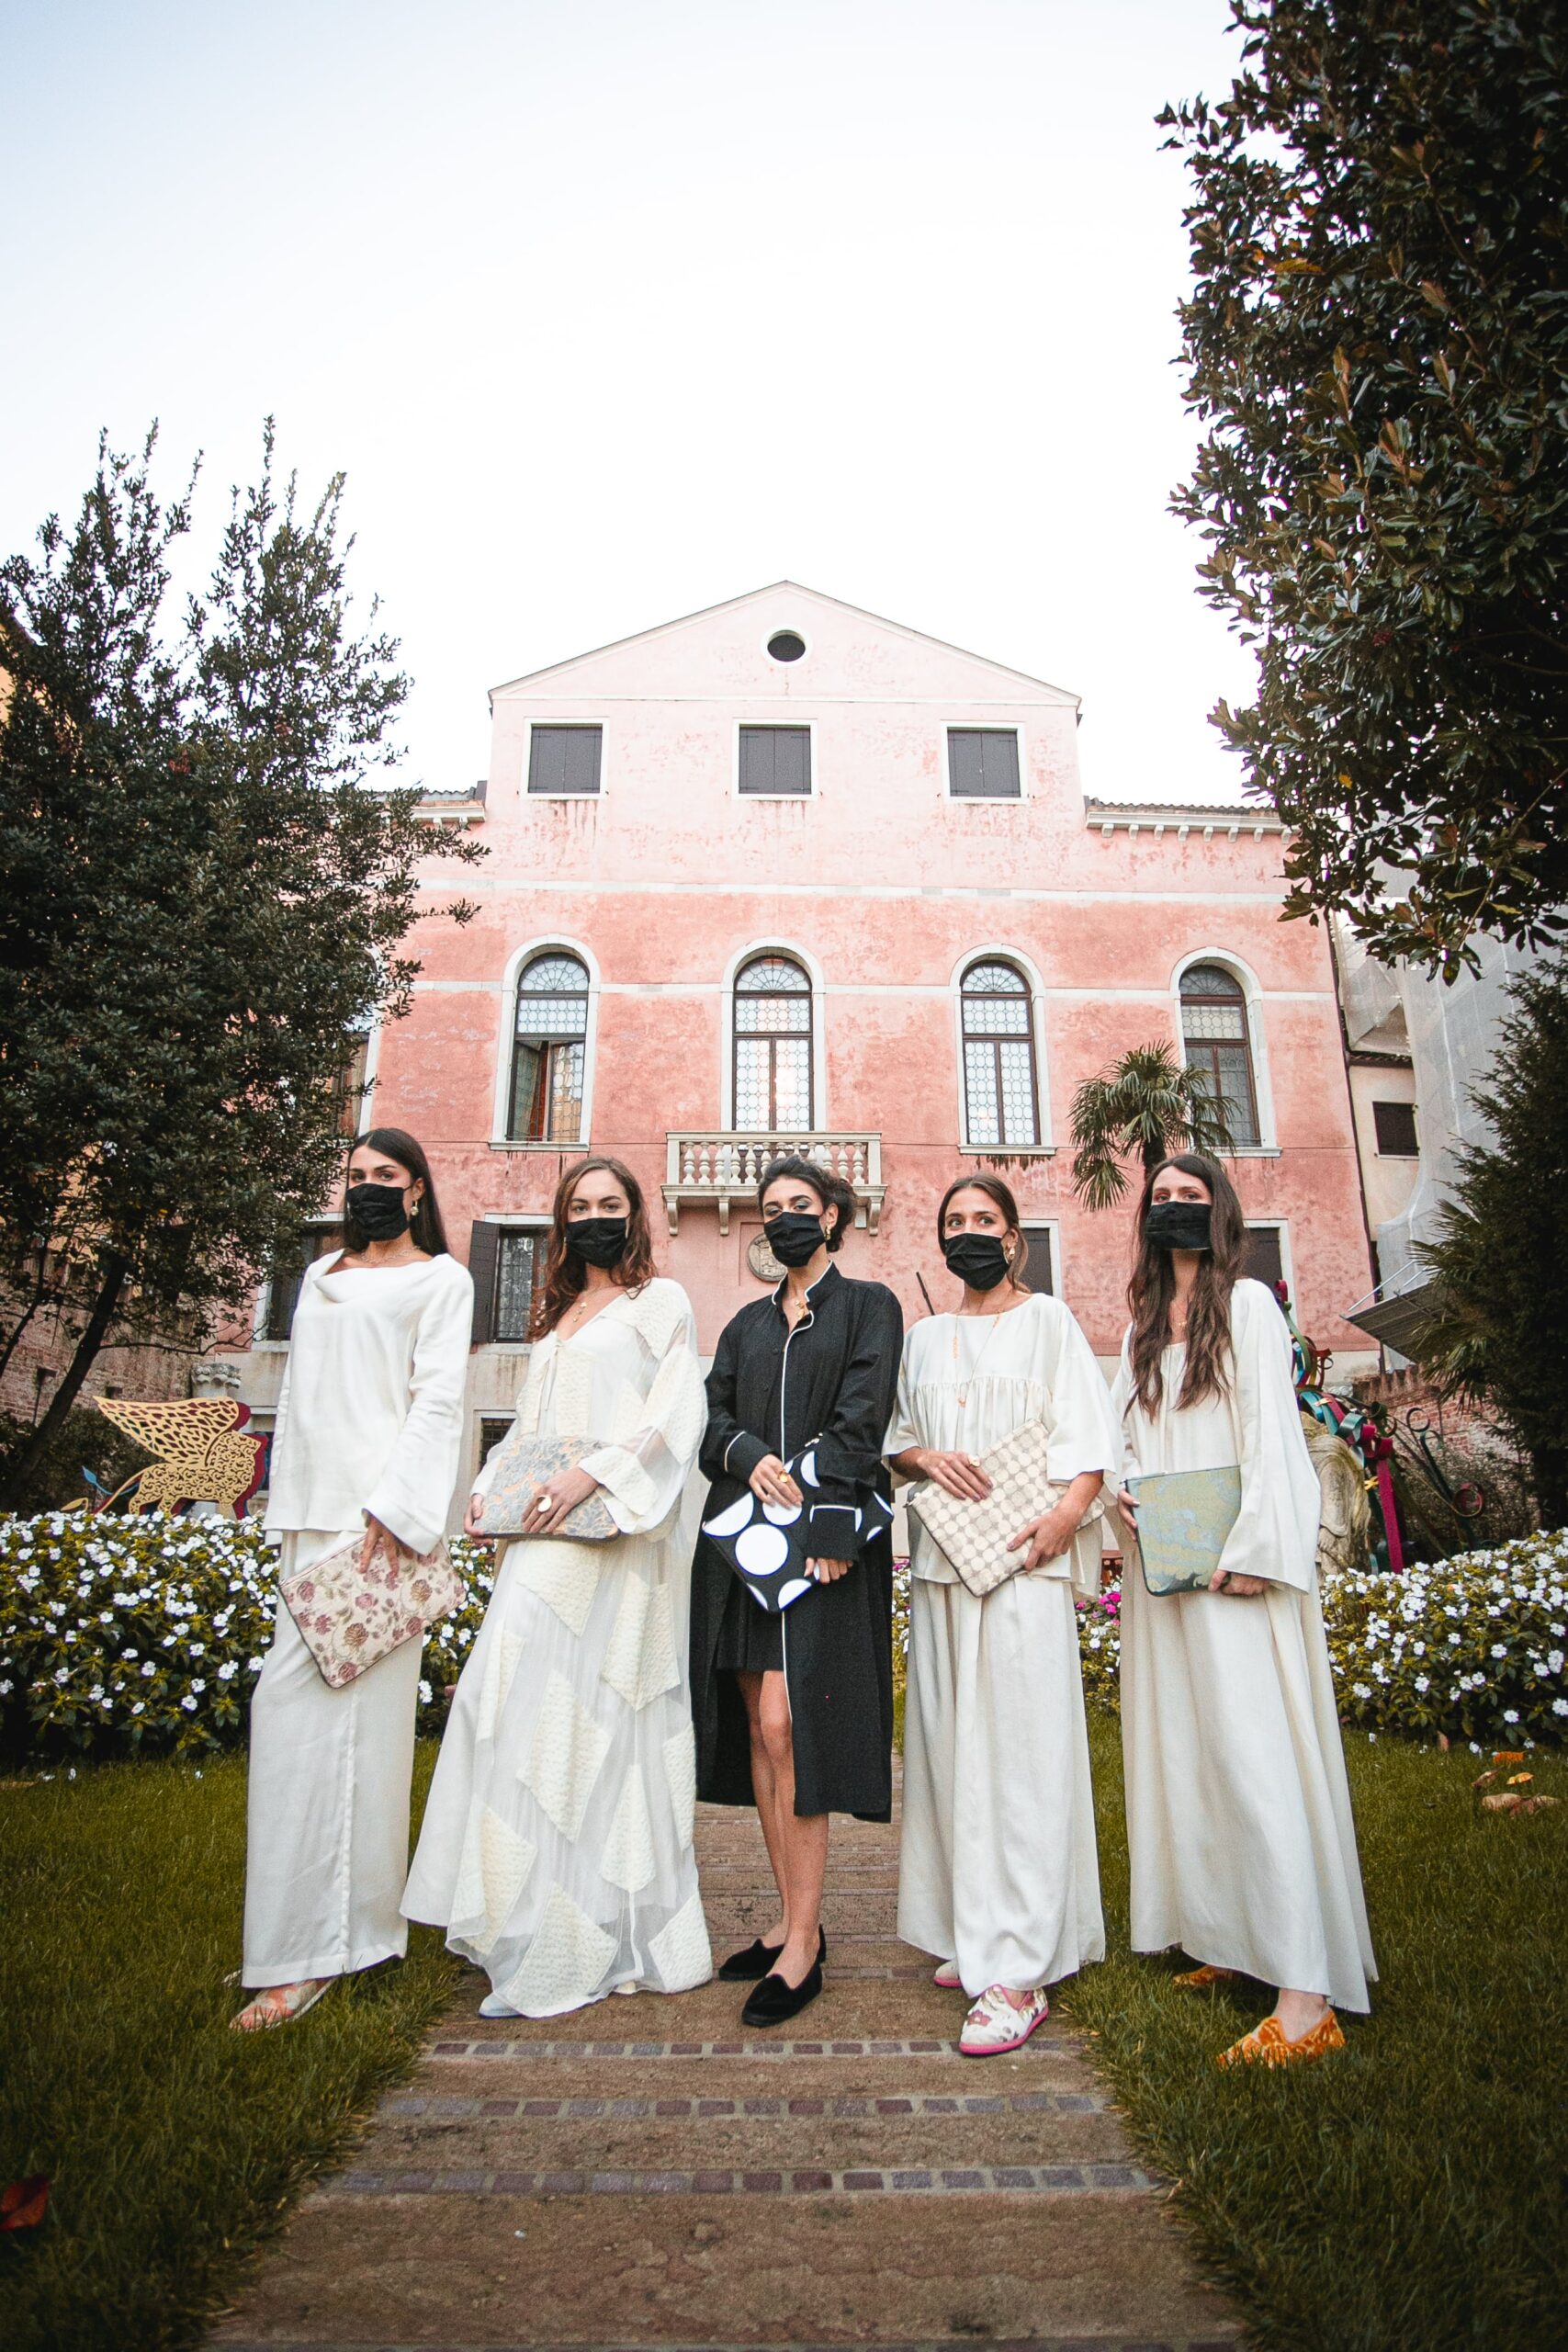 Tabinotabi x Venart at Venice Fashion Week @ItsMartaEffe